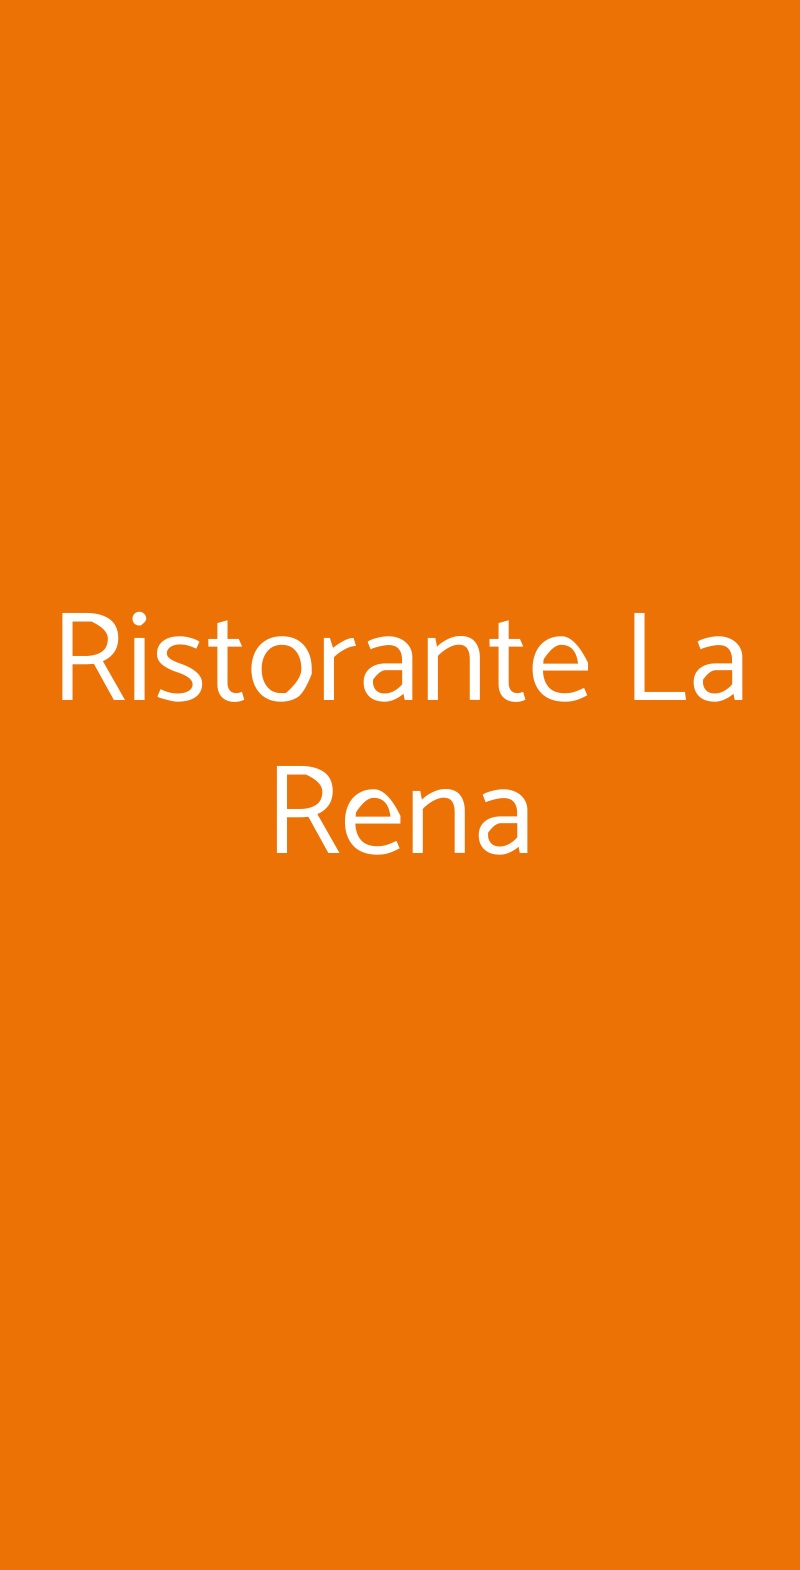 Ristorante  La Rena Milano menù 1 pagina